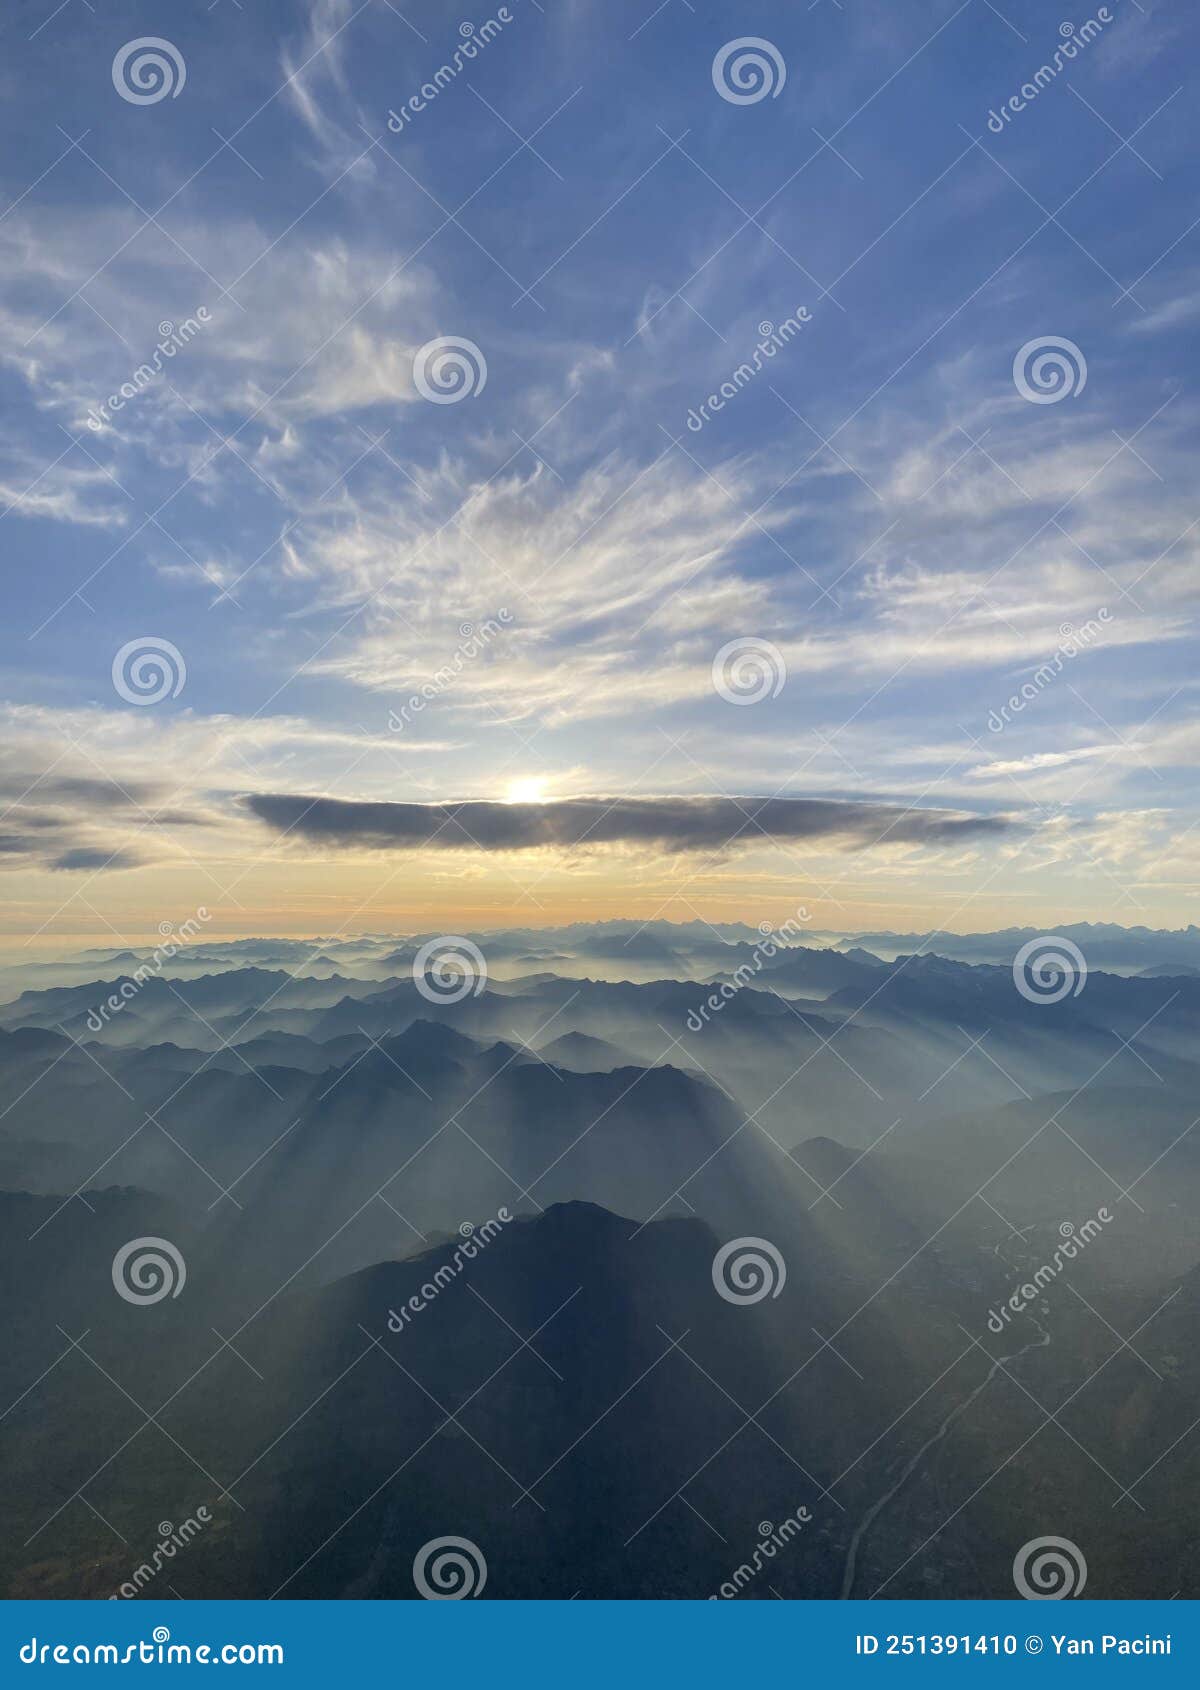 airplaine cloudy sky view, dubrovnik, croatia